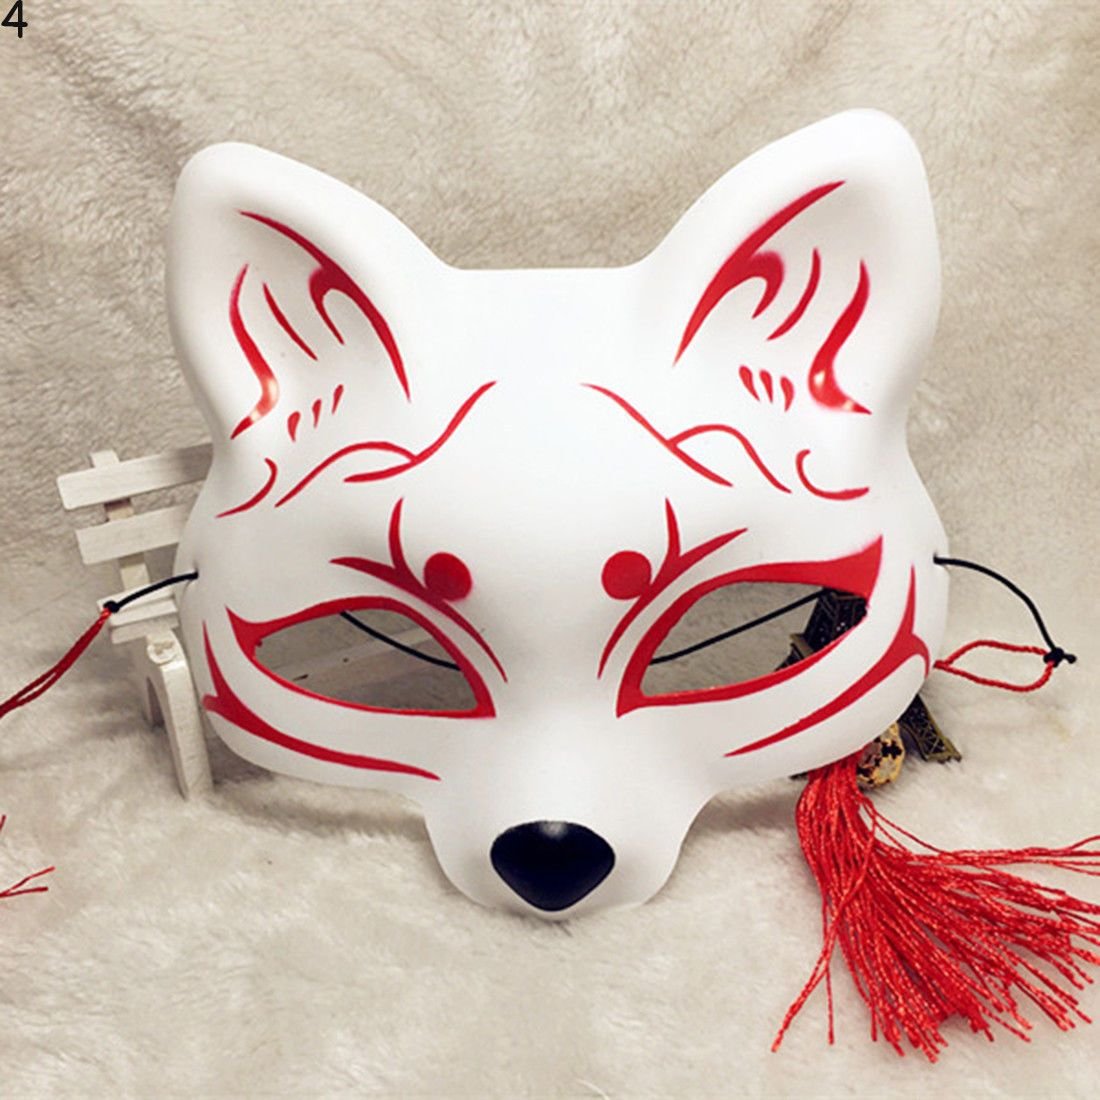 Японские маски лисов